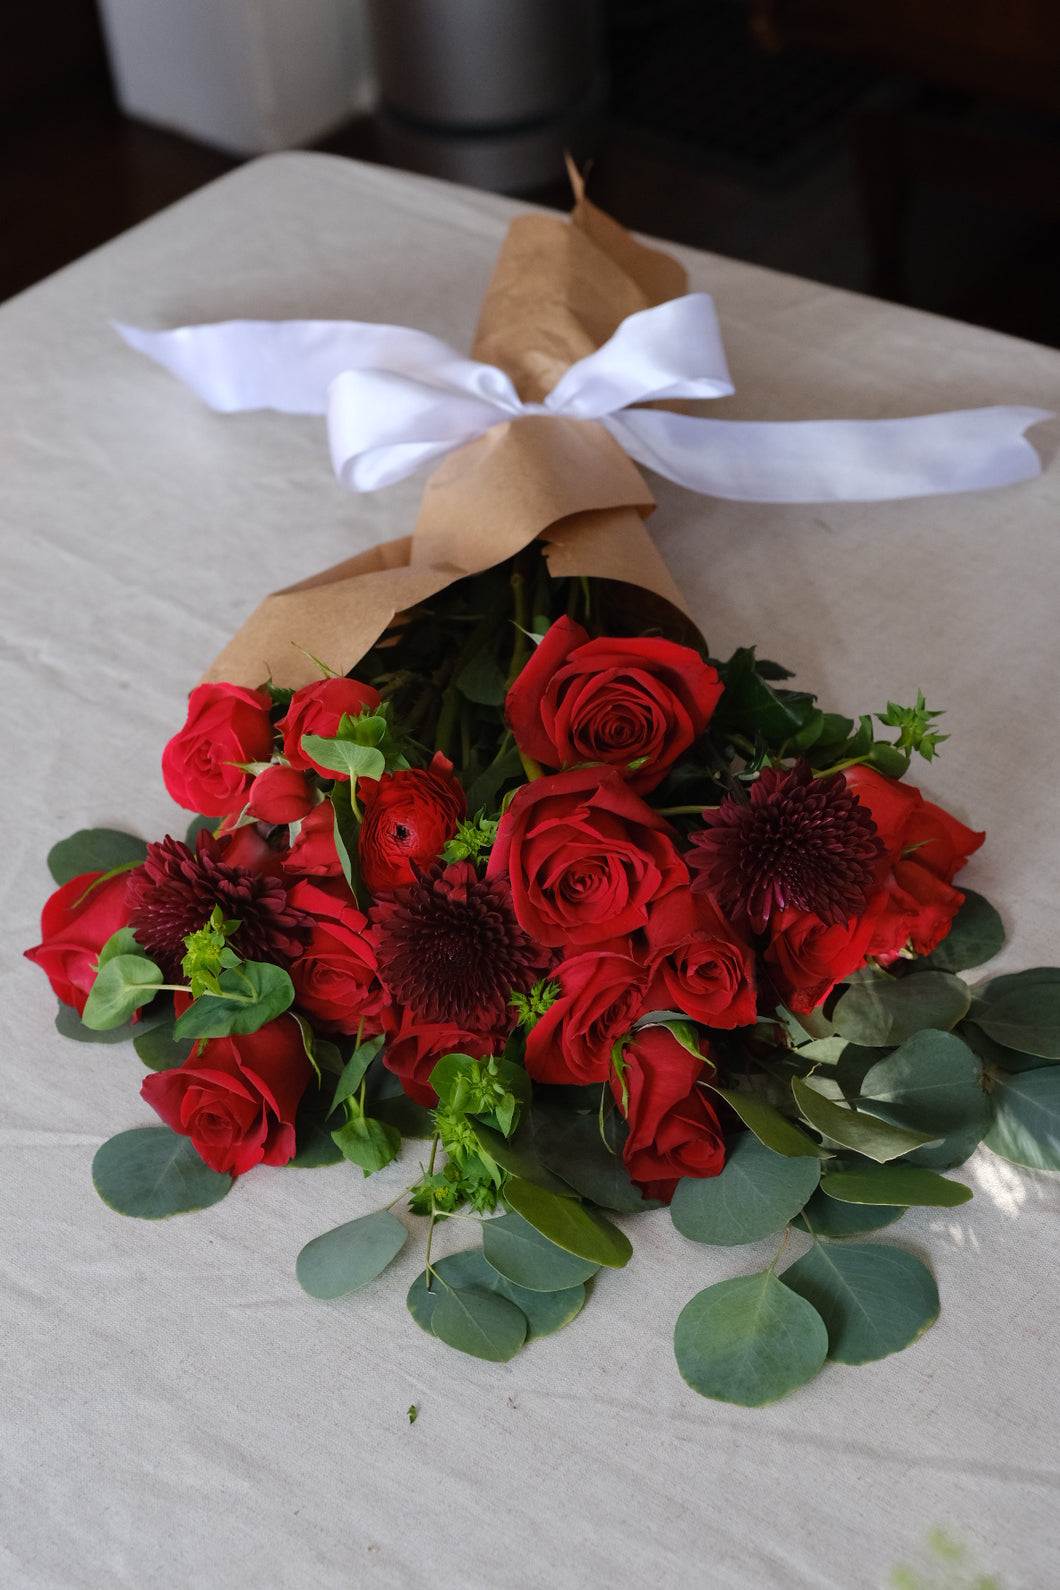 So Scarlet - Floral Bouquet Pre-Order for 2/10